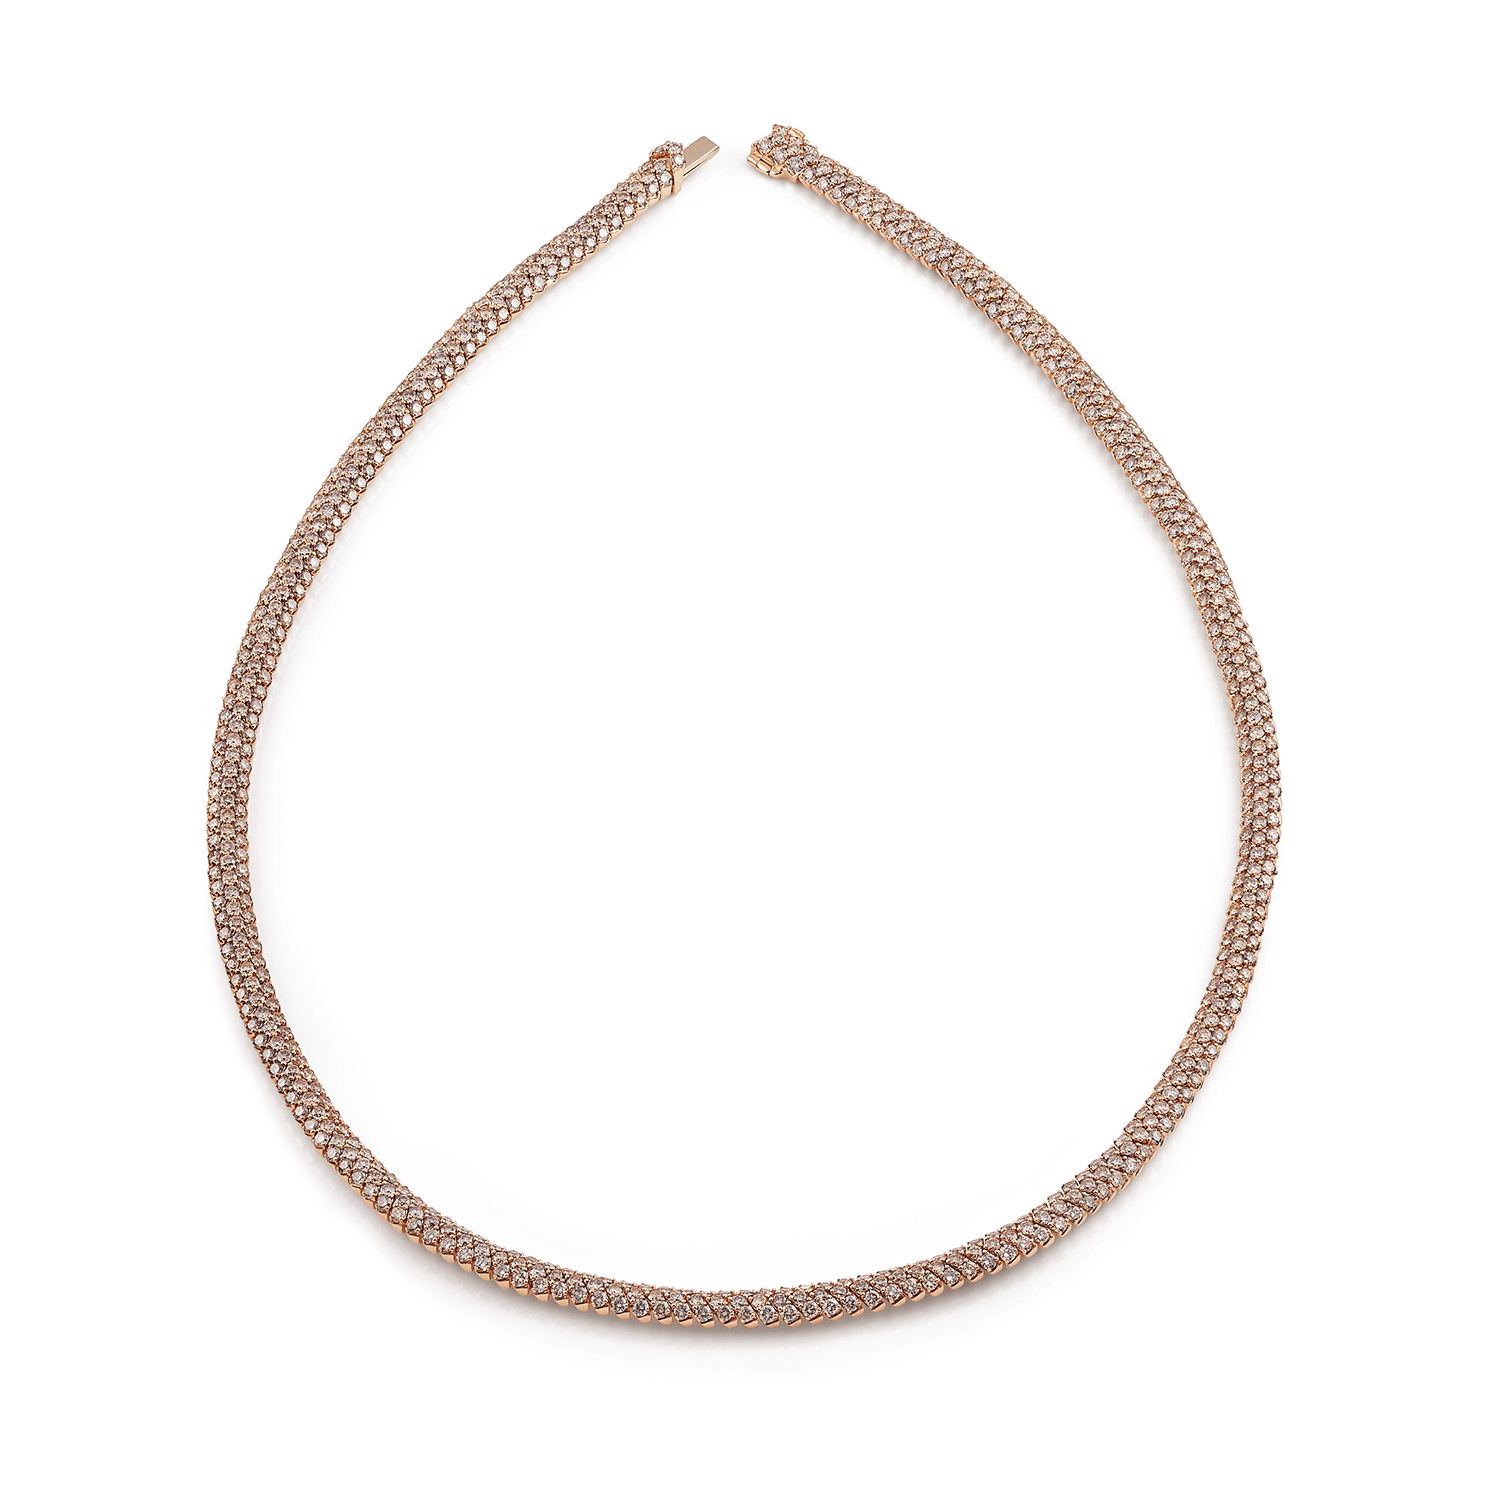 Al Coro Amori Necklace in 18k Gold with Brown Diamonds - Orsini Jewellers NZ